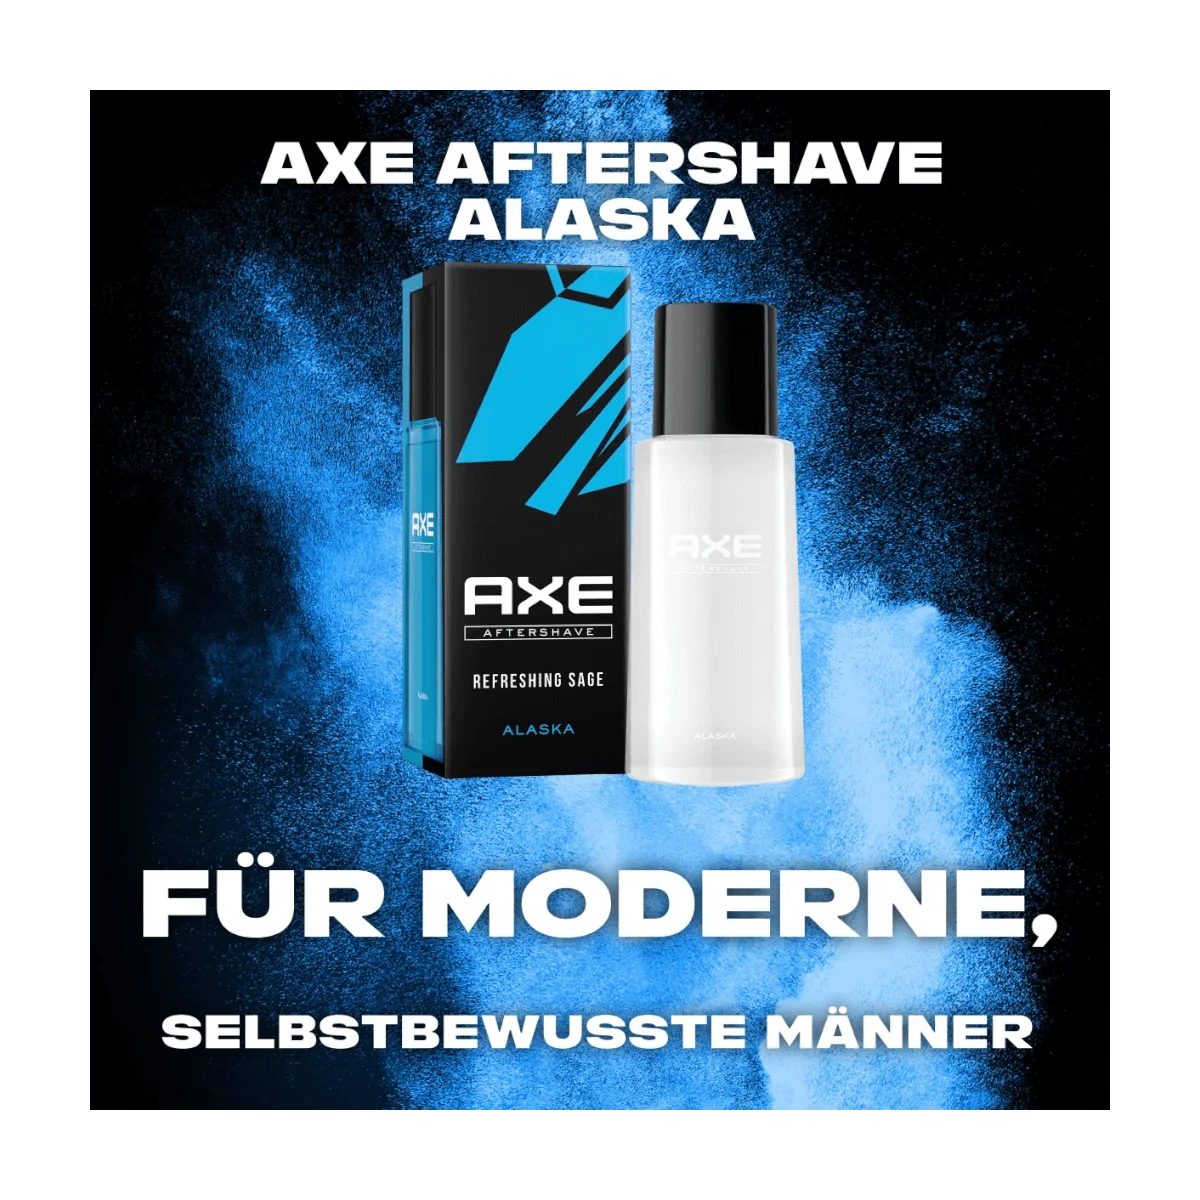 After Shave Lotion - Axe Alaska Aftershave Refreshing Sage